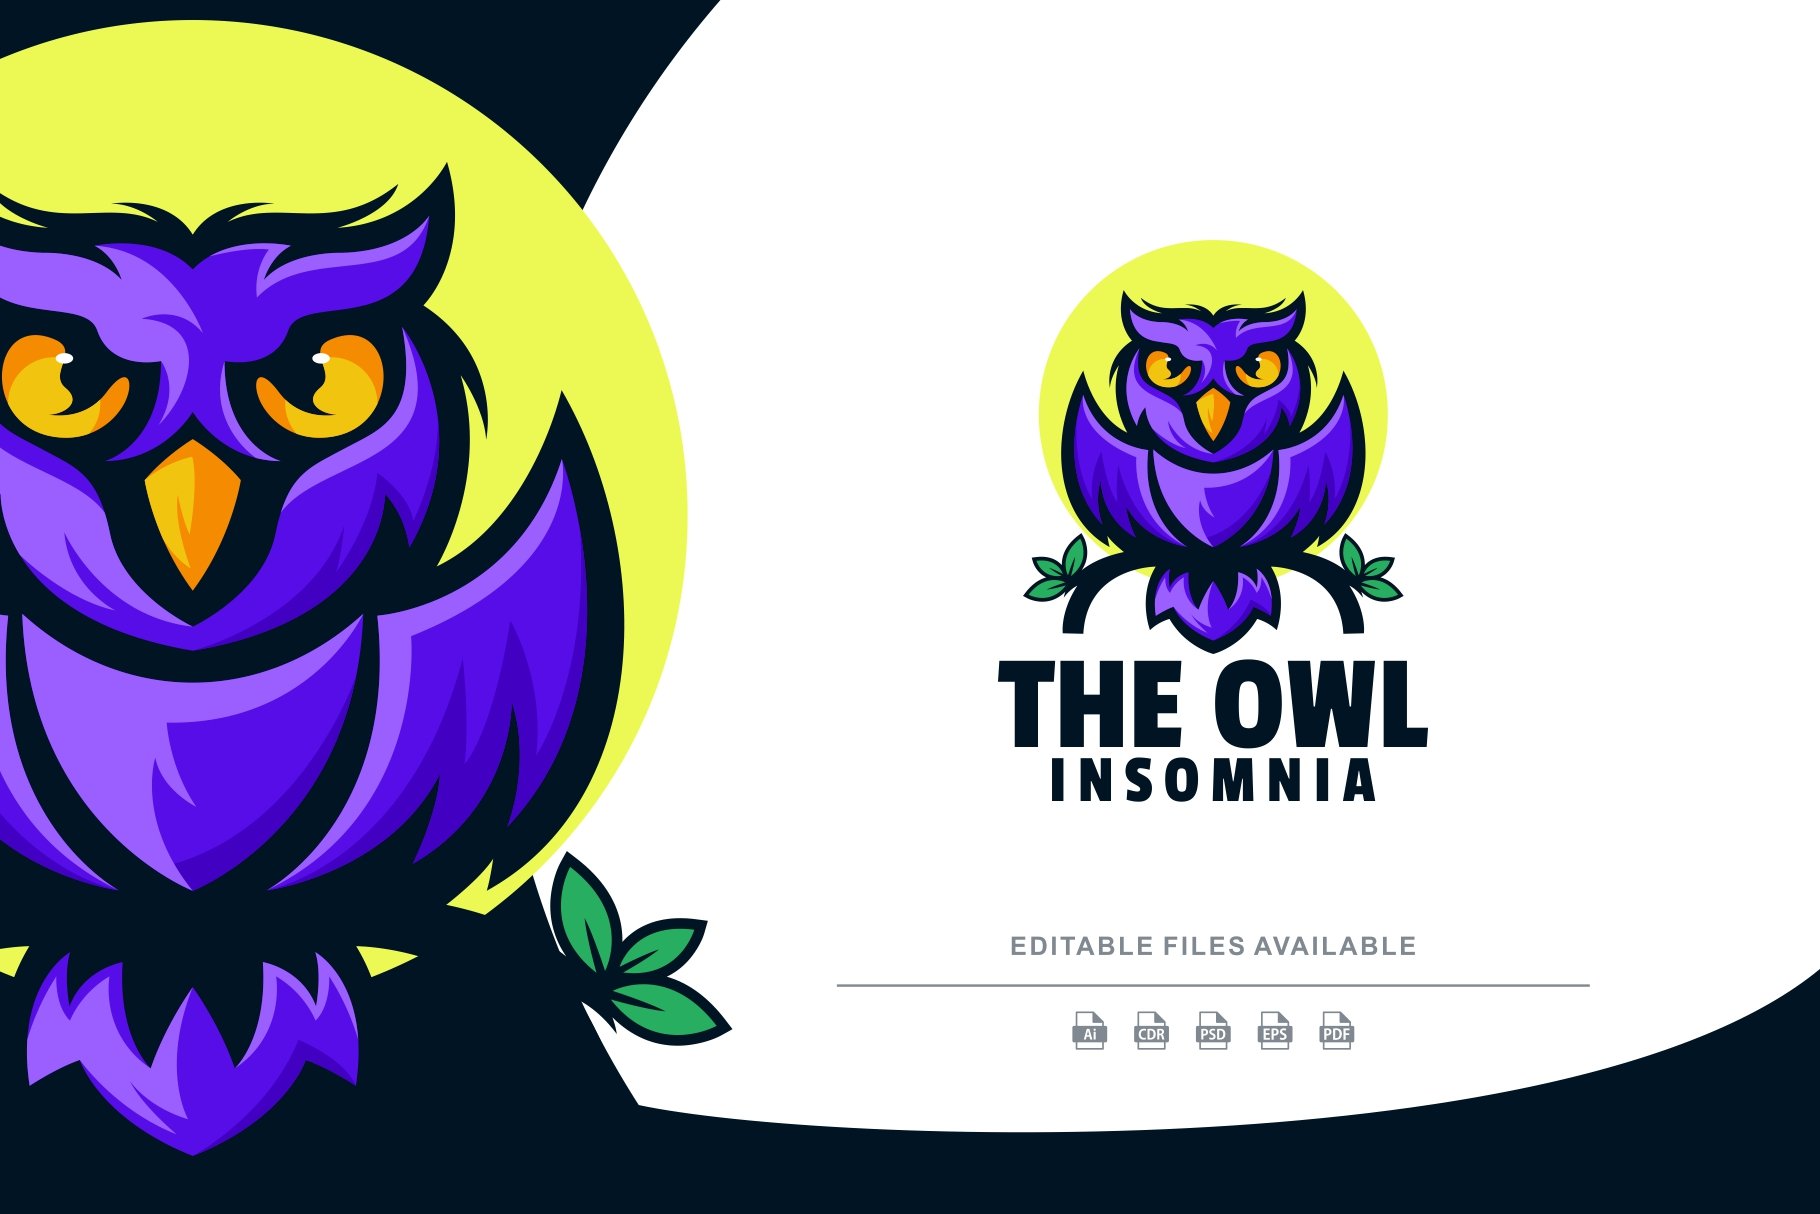 Owl Insomnia Simple Mascot Logo cover image.